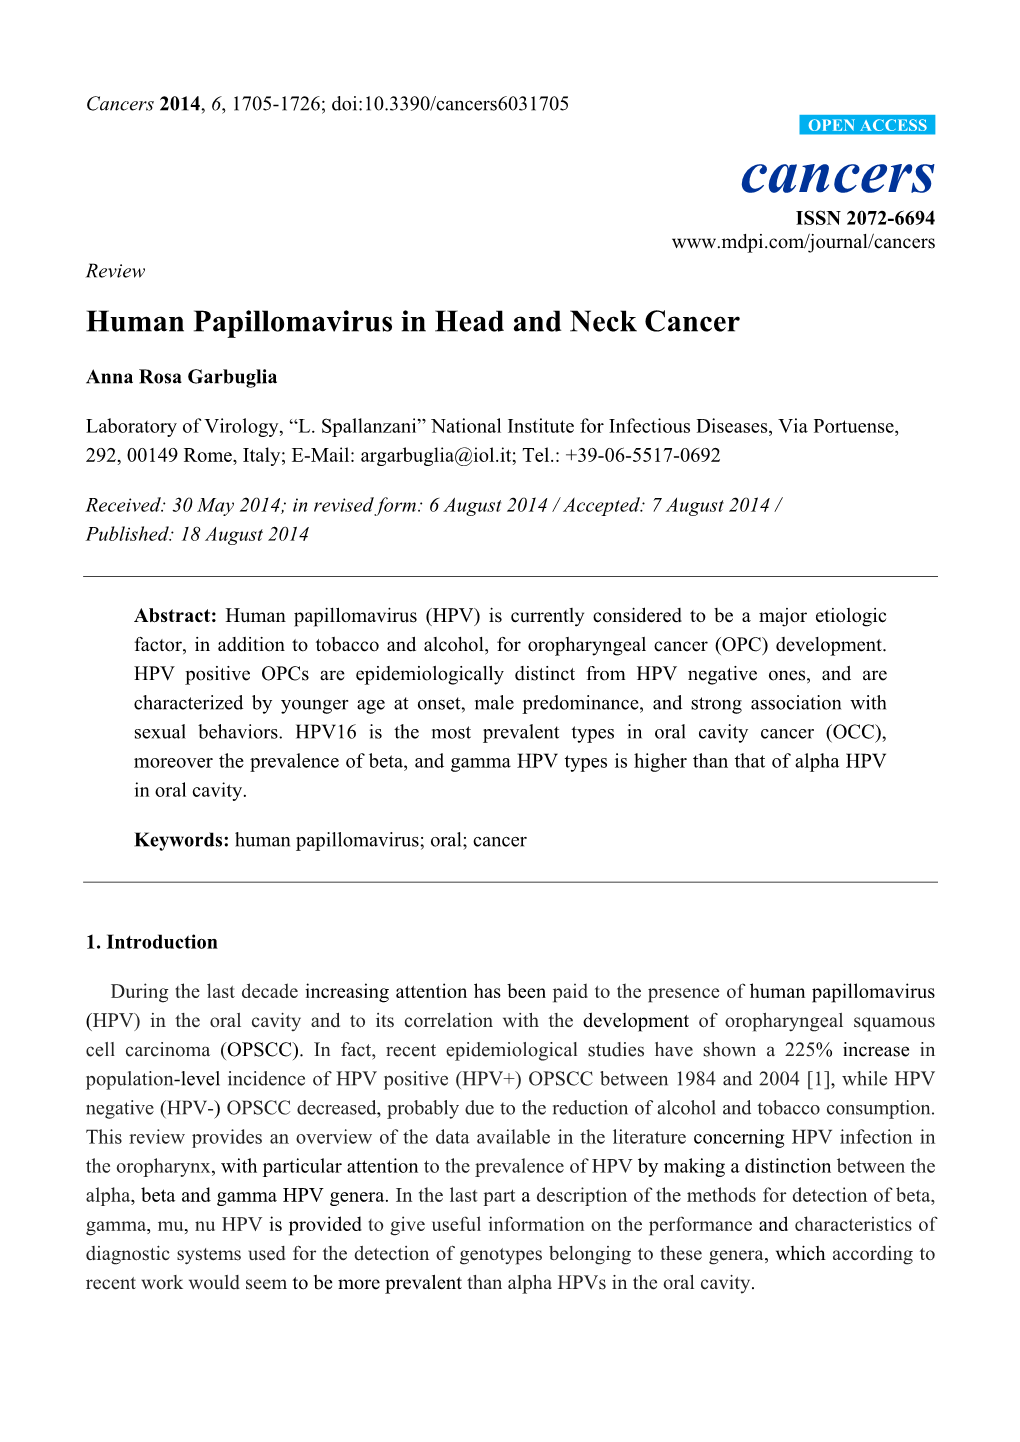 Human Papillomavirus in Head and Neck Cancer